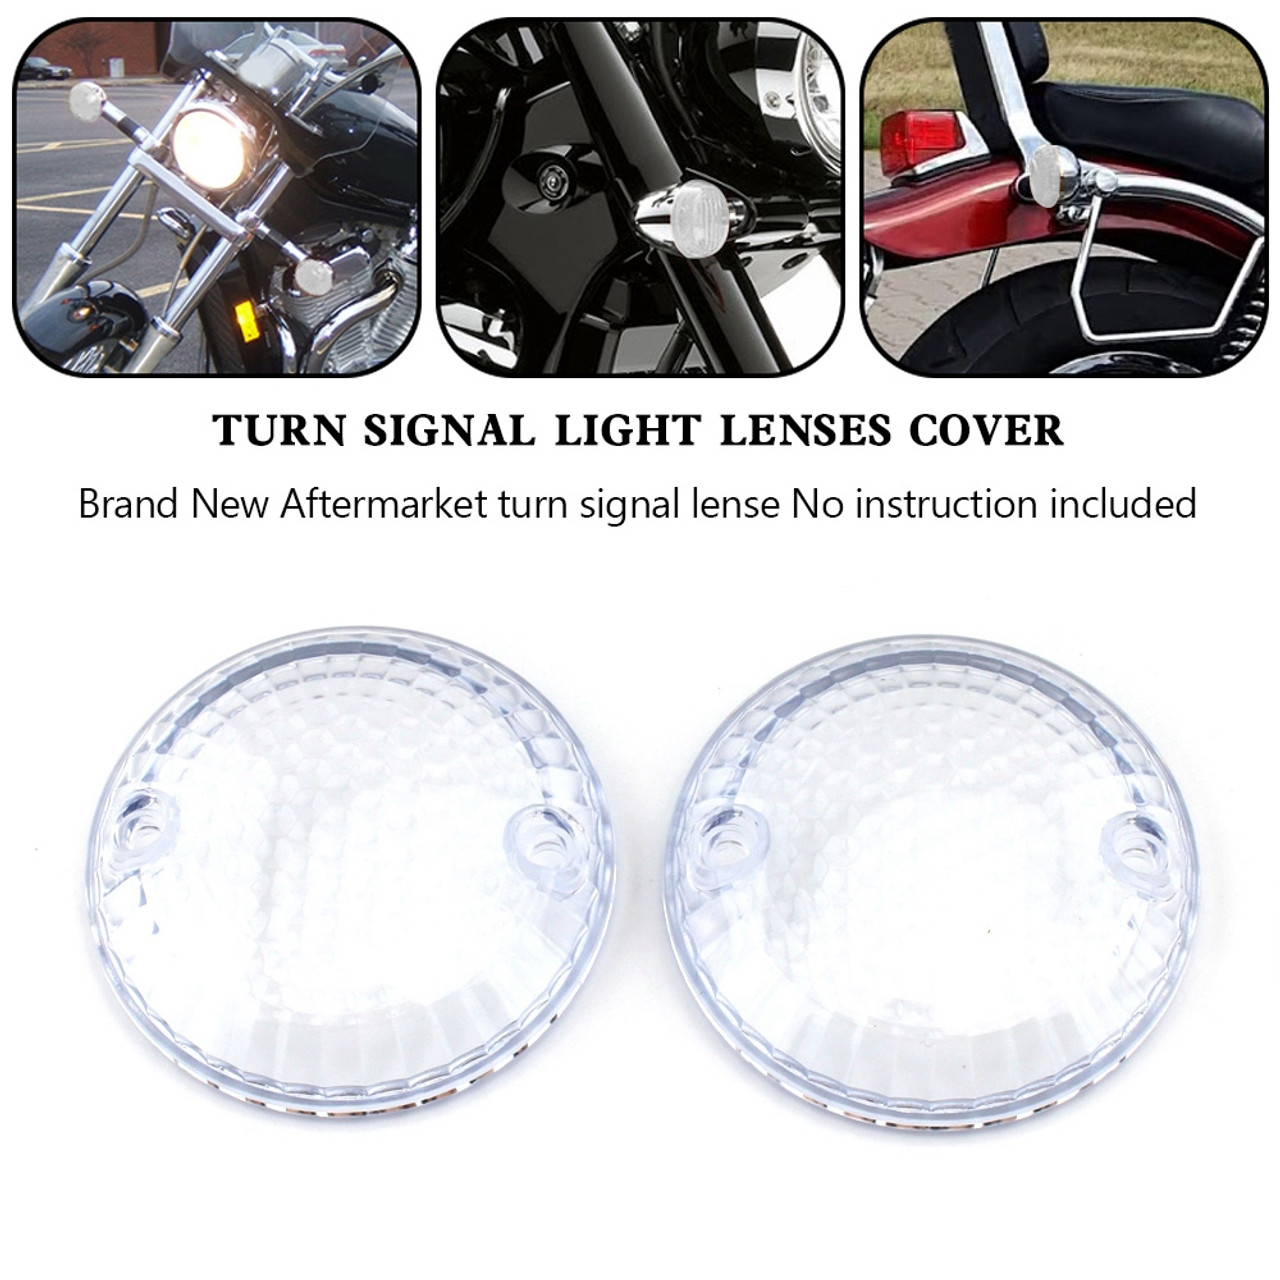 Turn Signal Light Lens Cover For Suzuki Cruisers Intruder 1400 VX800 Clear